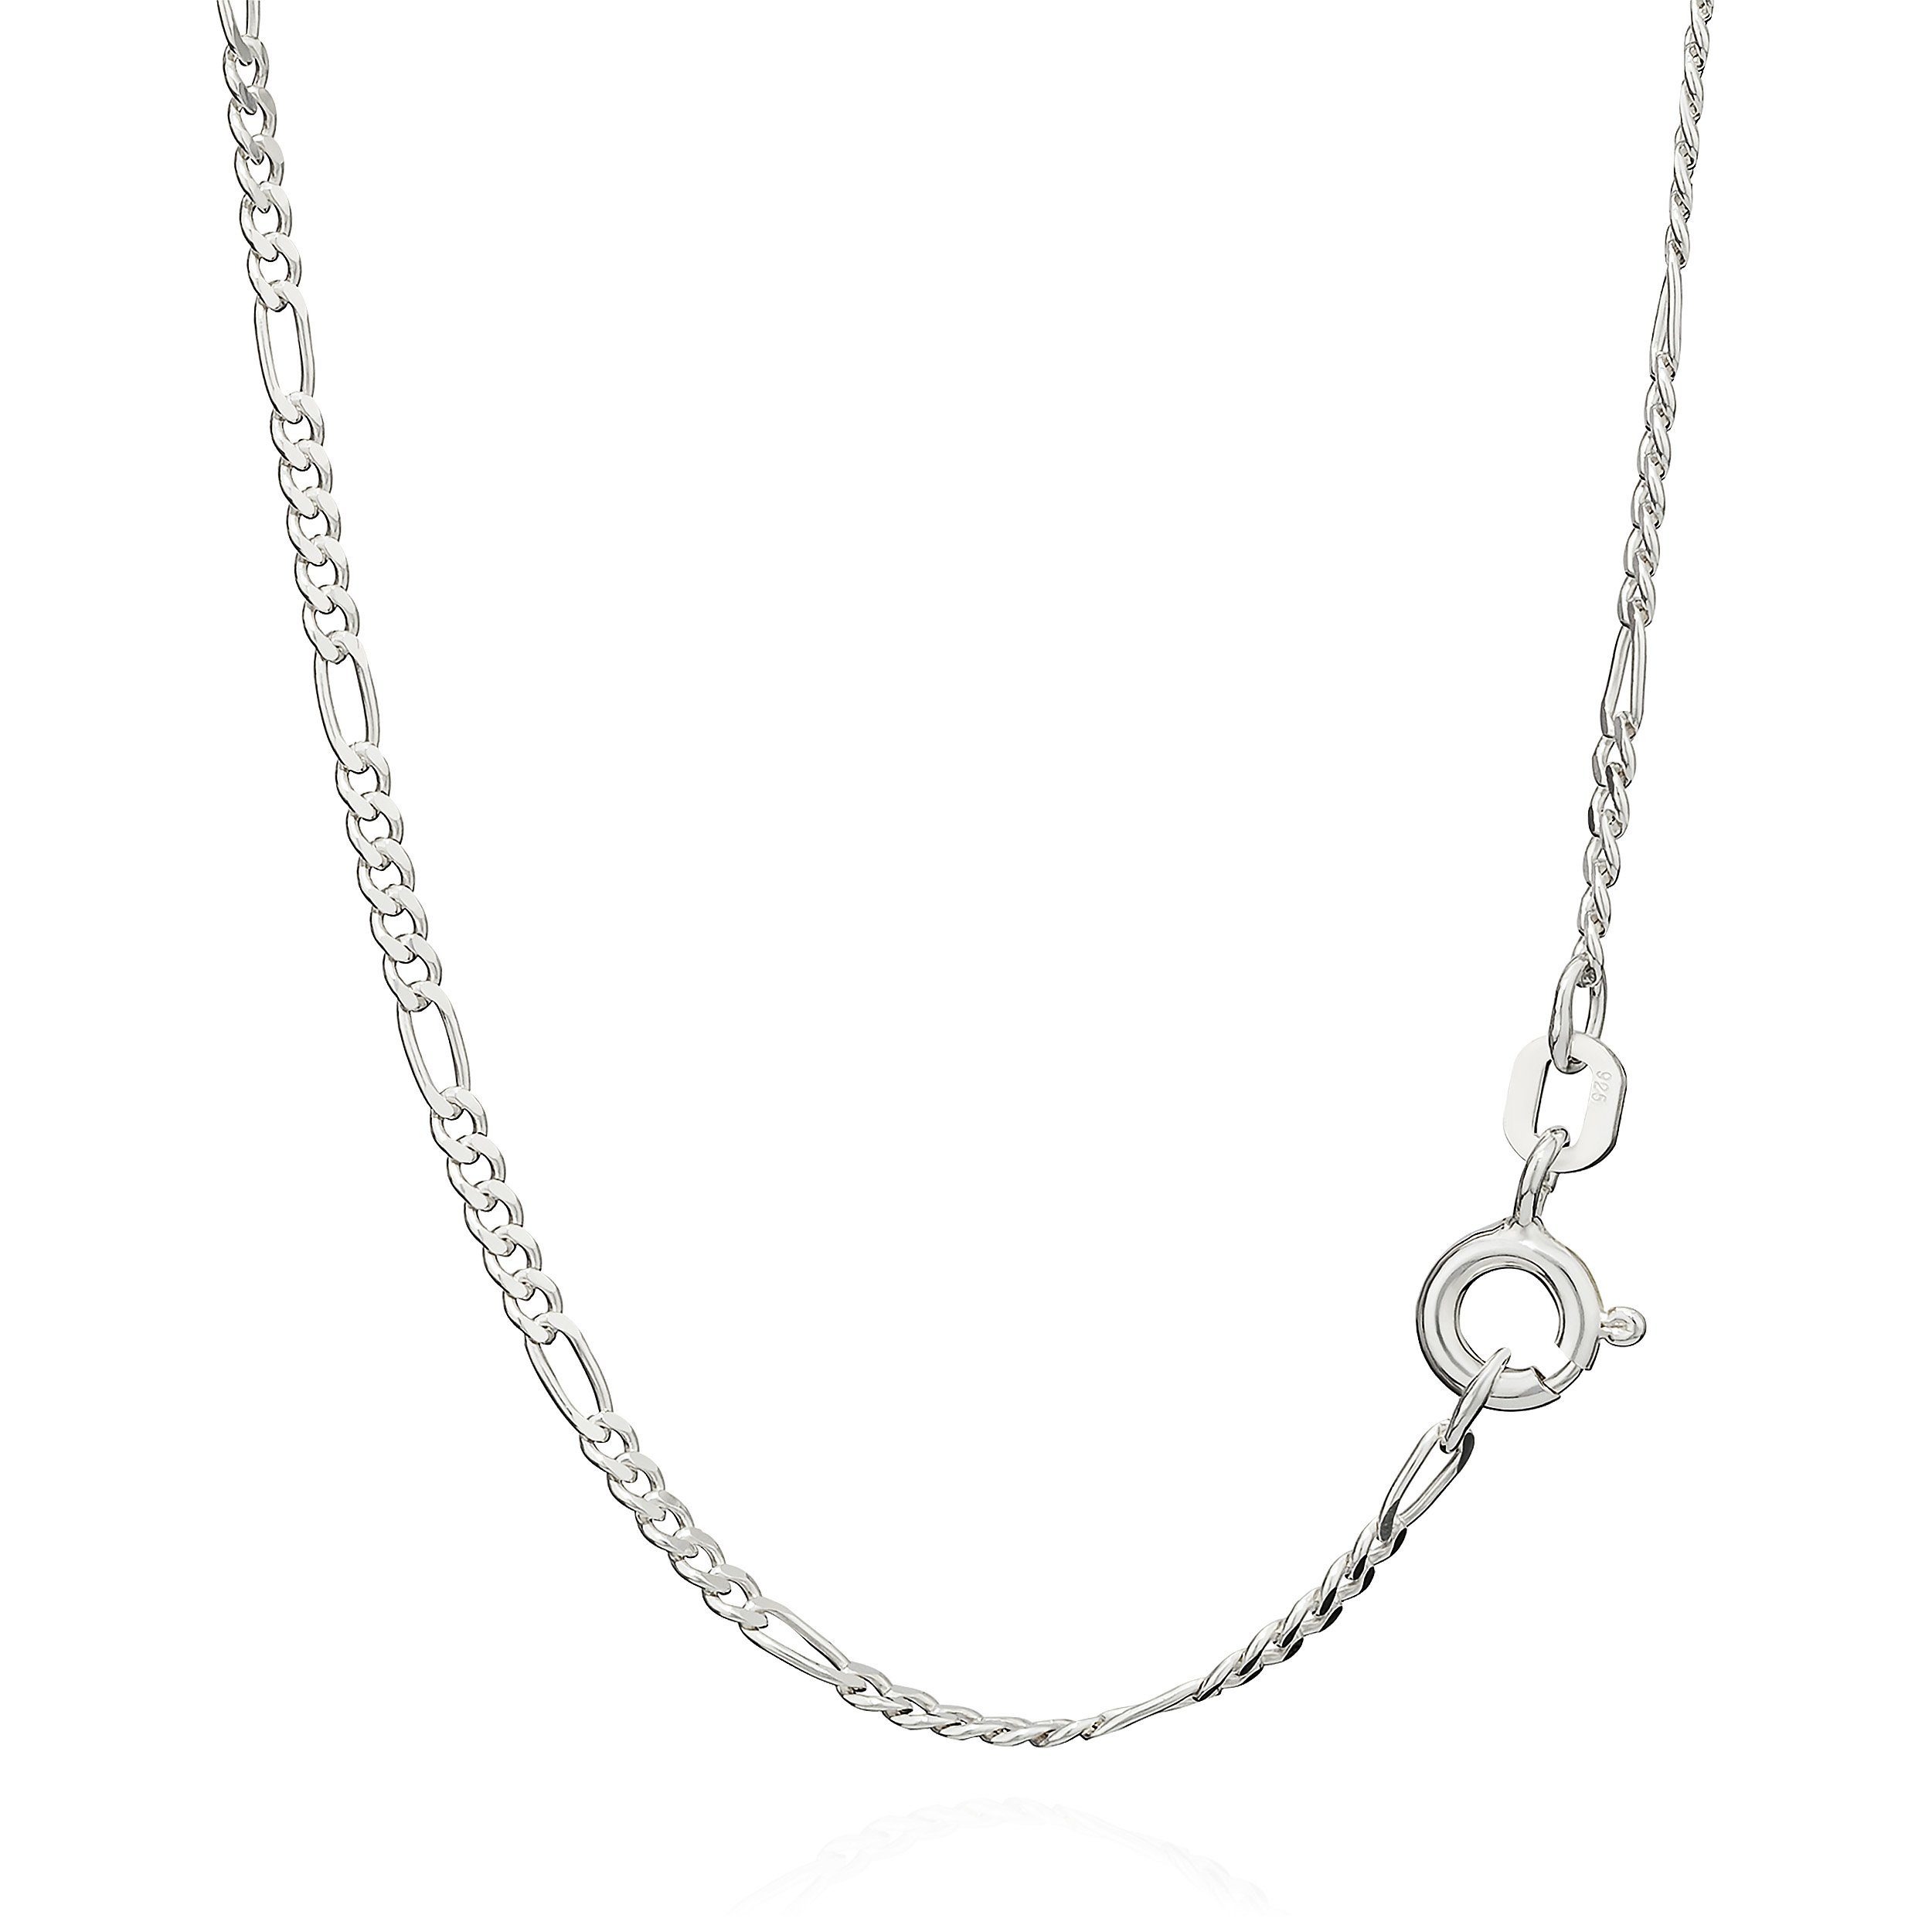 NKlaus Silberkette Figarokette Diamantiert Silber Kette 3622, 45cm La